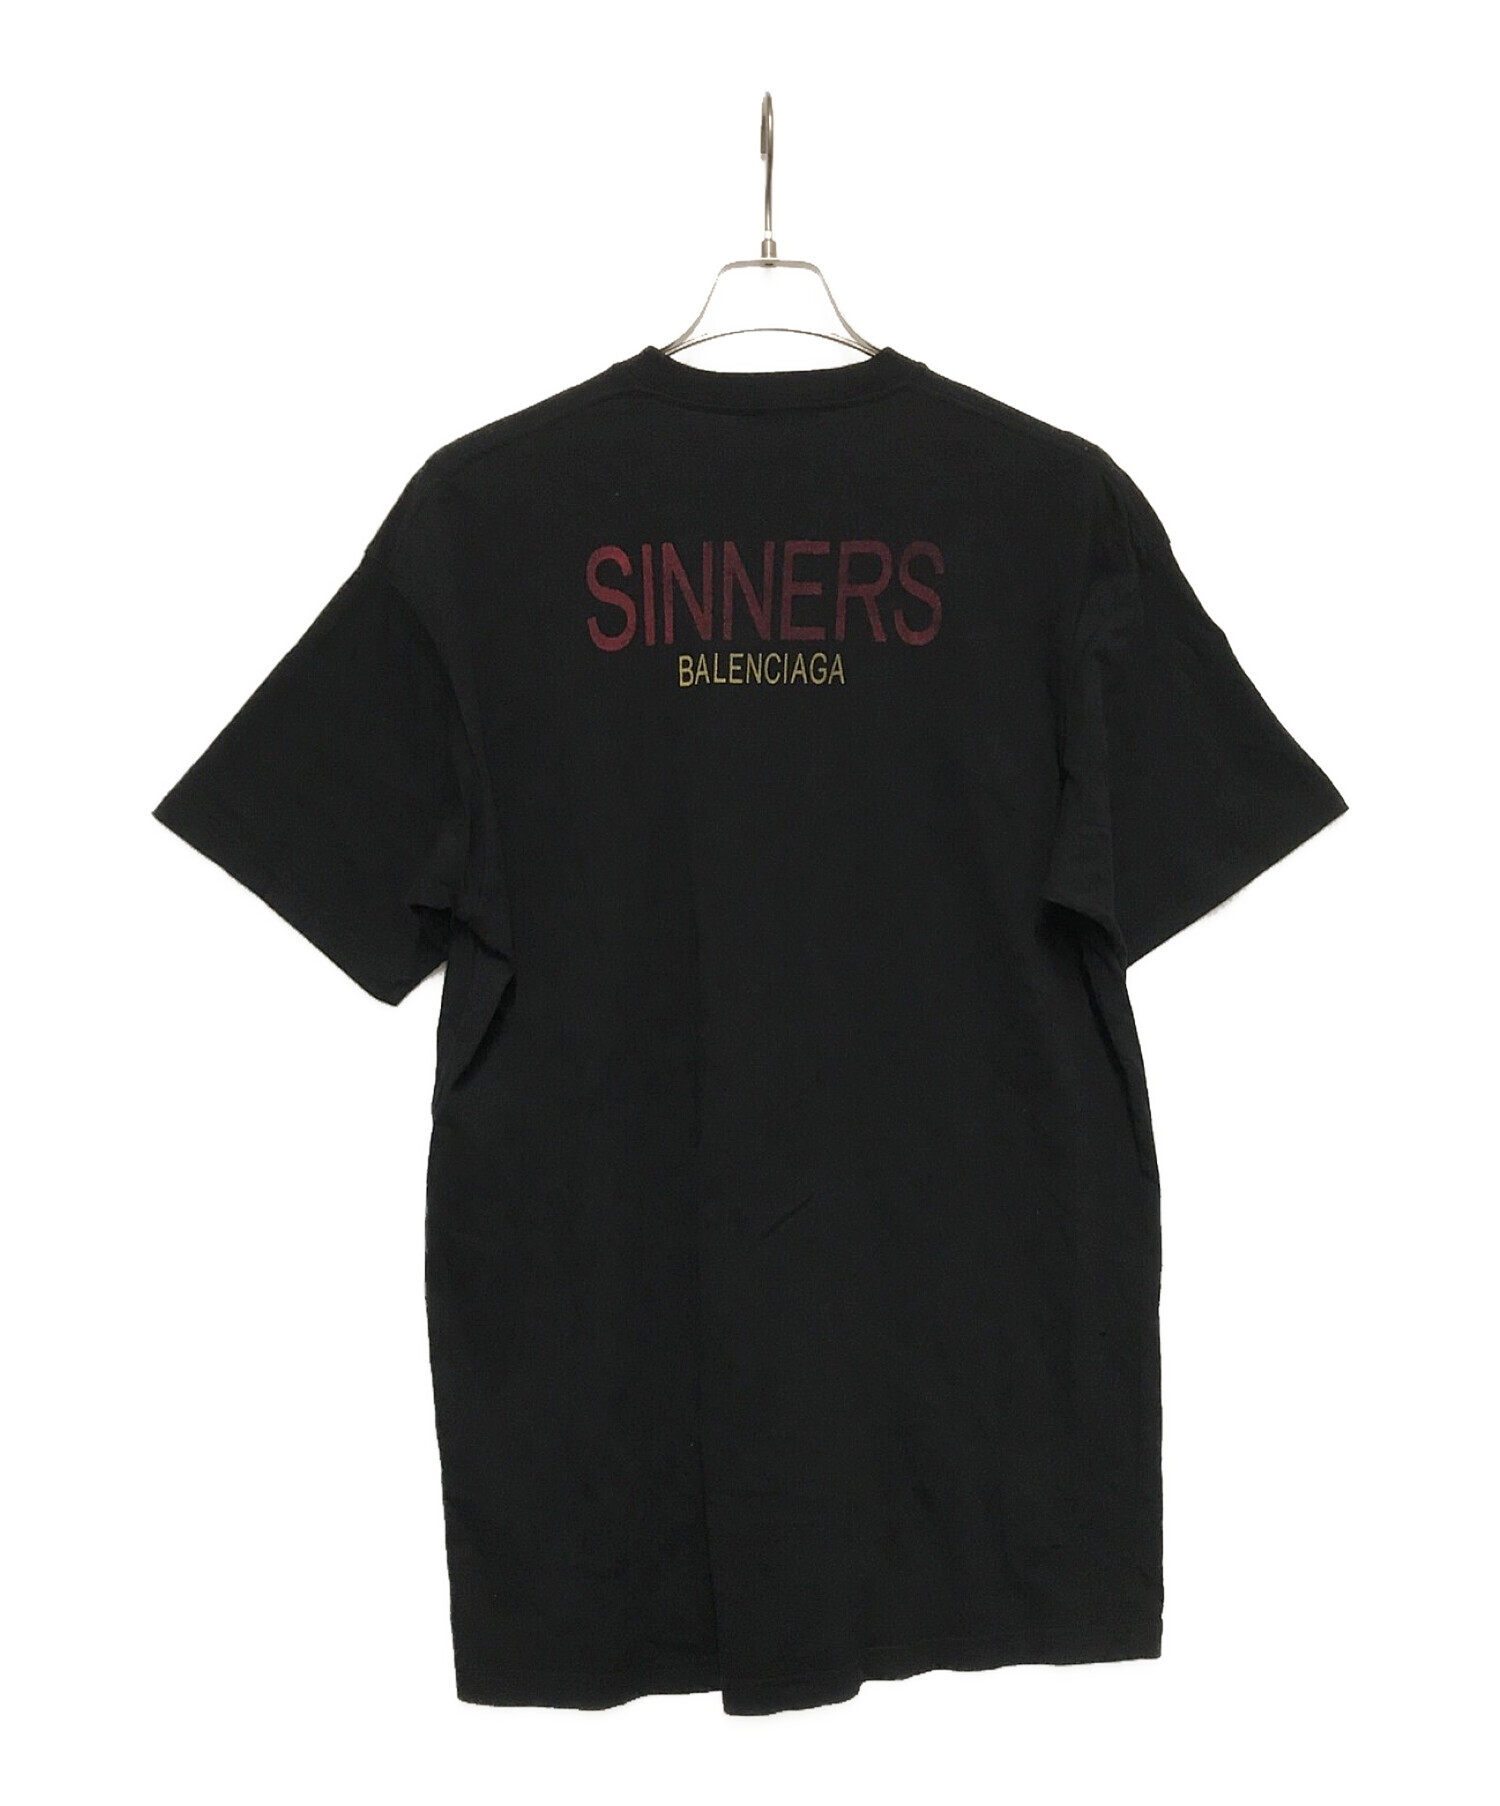 BALENCIAGA (バレンシアガ) SINNERSプリントTシャツ ブラック サイズ:XS